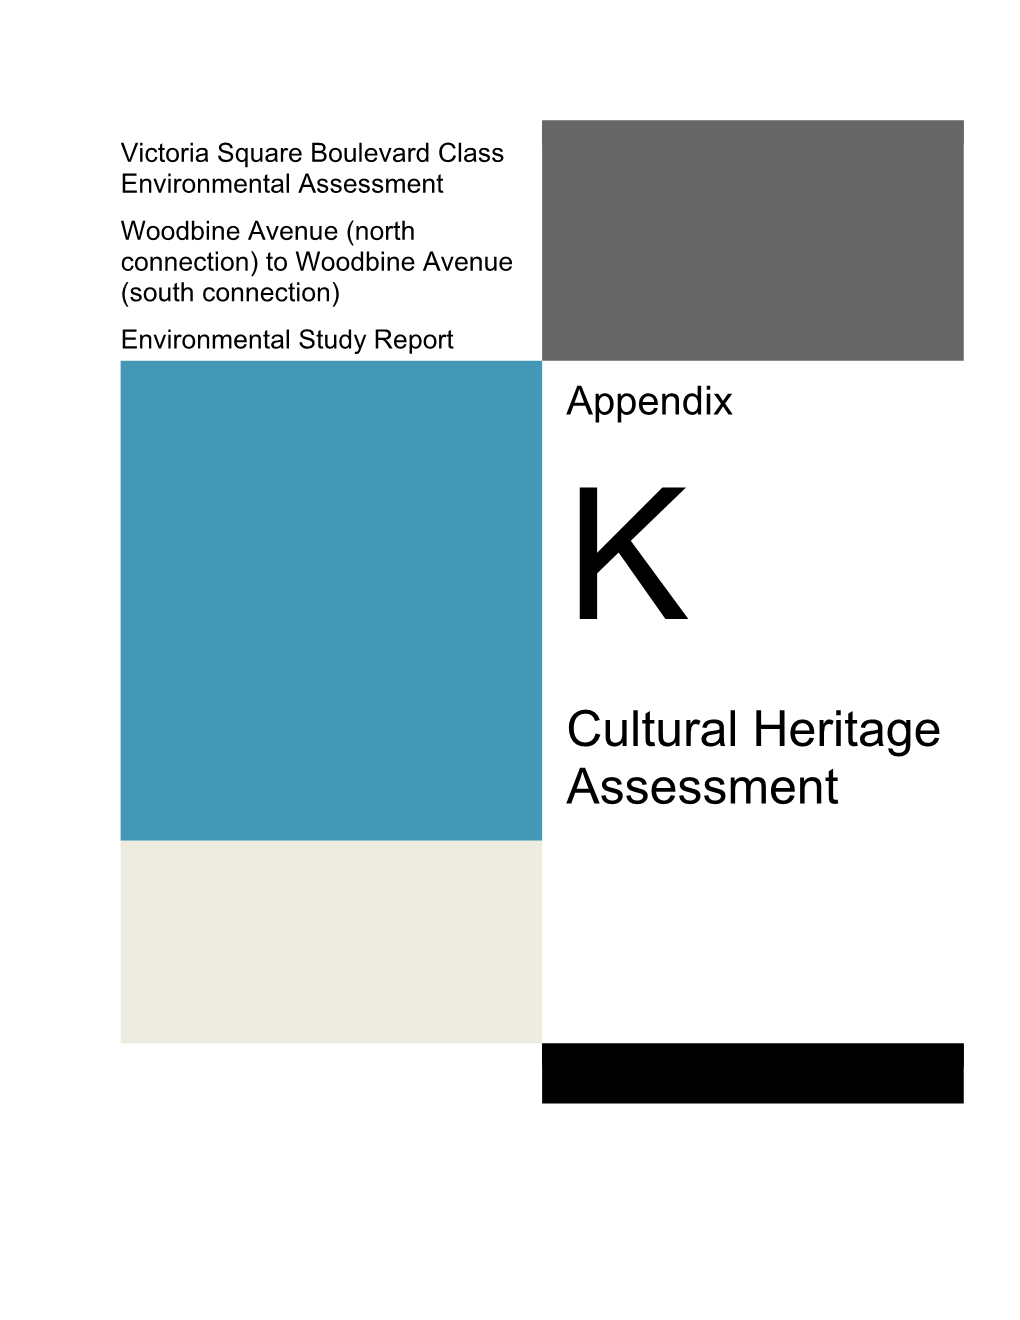 Cultural Heritage Assessment